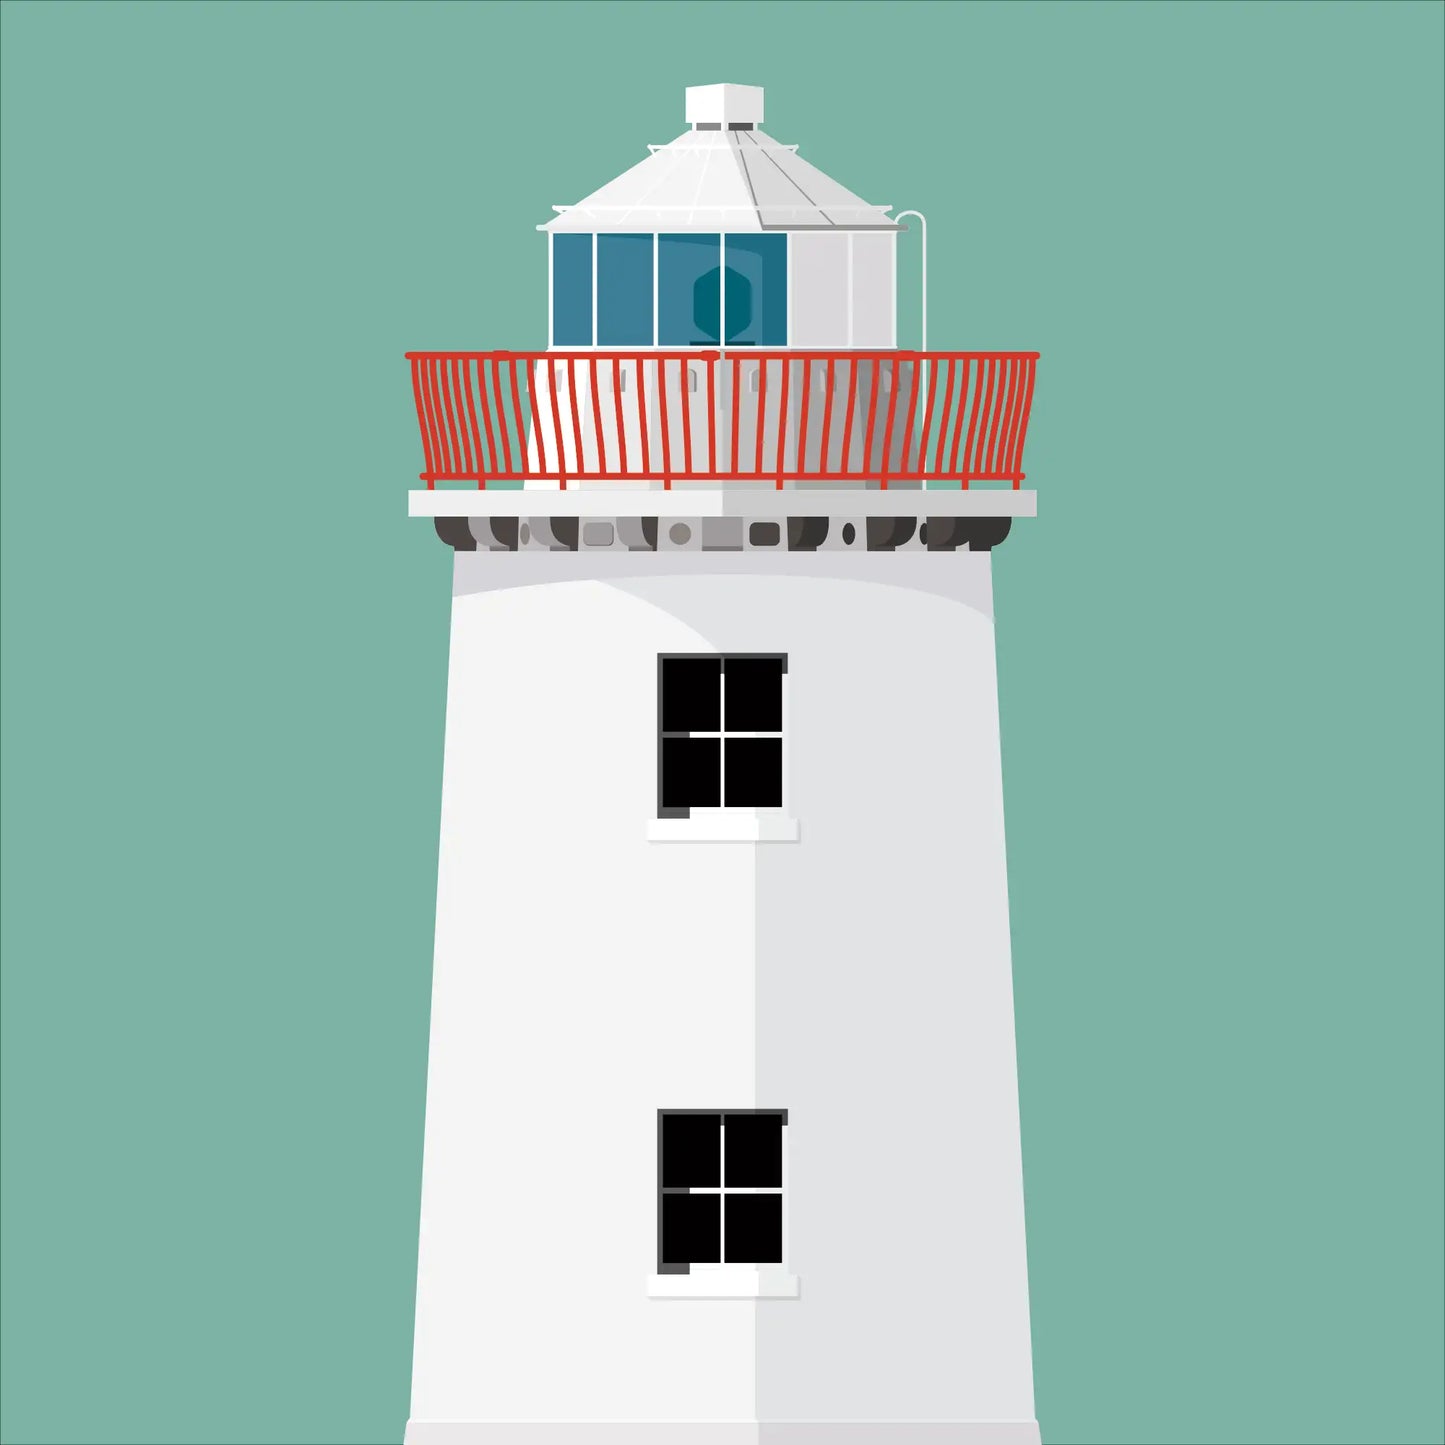 Illustration of Kilcredaun lighthouse on a white background inside light blue square.